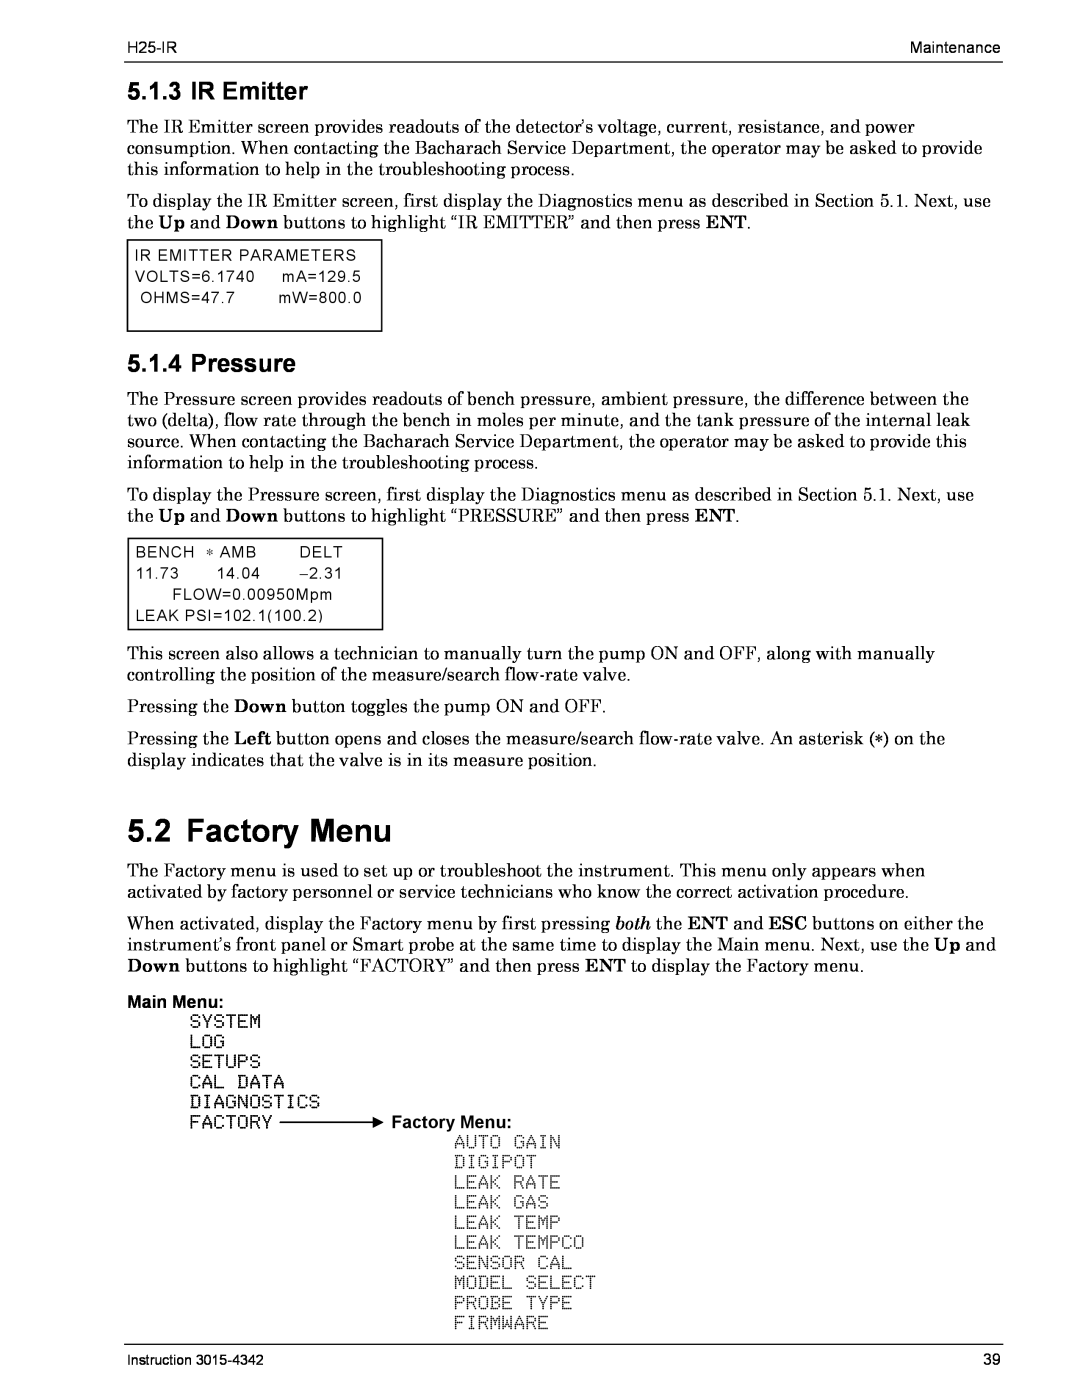 Bacharach H25-IR manual Factory Menu, IR Emitter, Pressure 